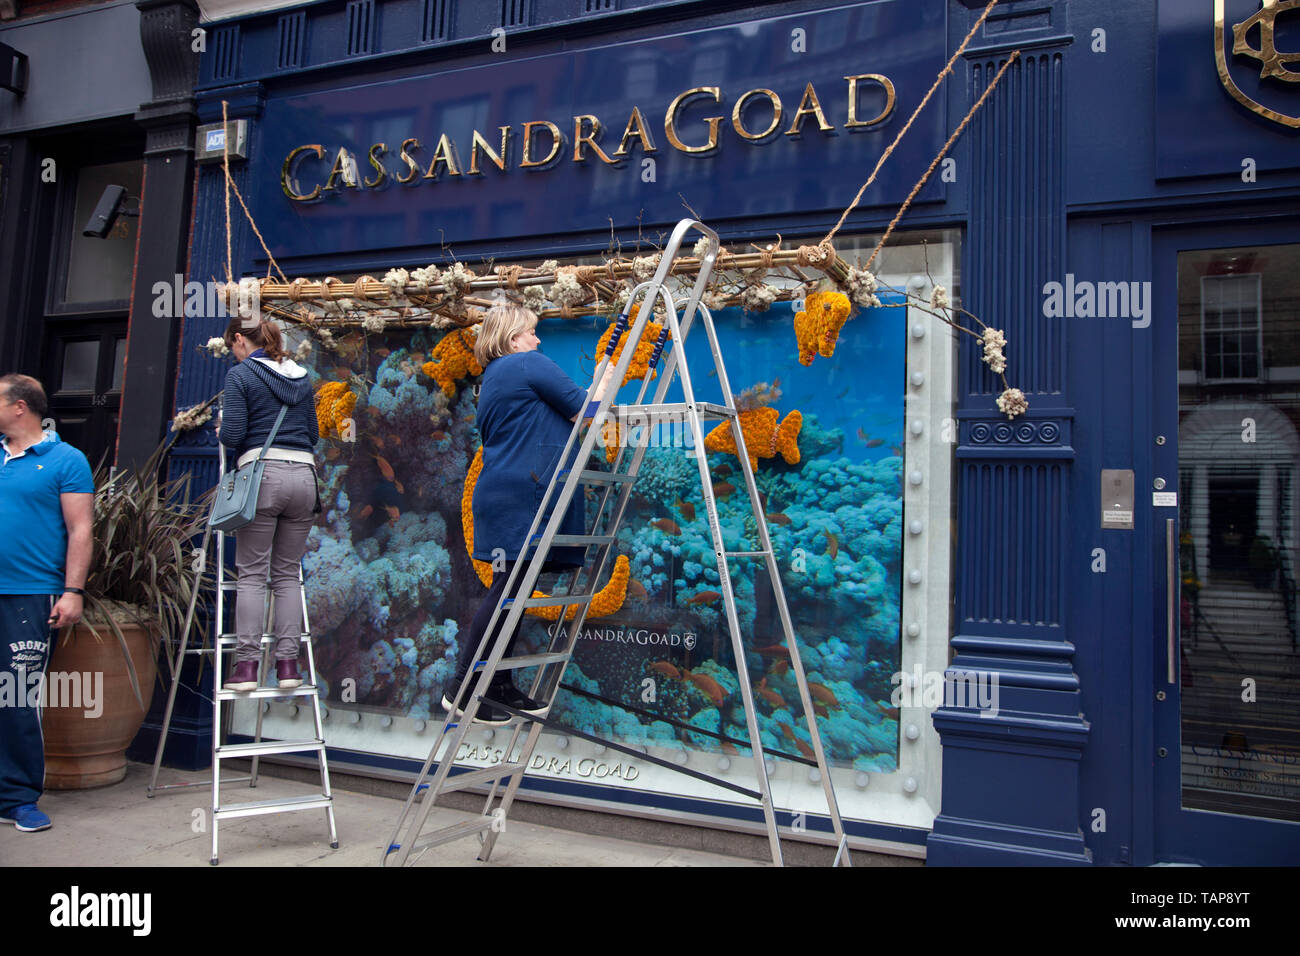 Preparing for Cassandra Goad’s floral display, Sloane Street, Chelsea, London SW3 Stock Photo